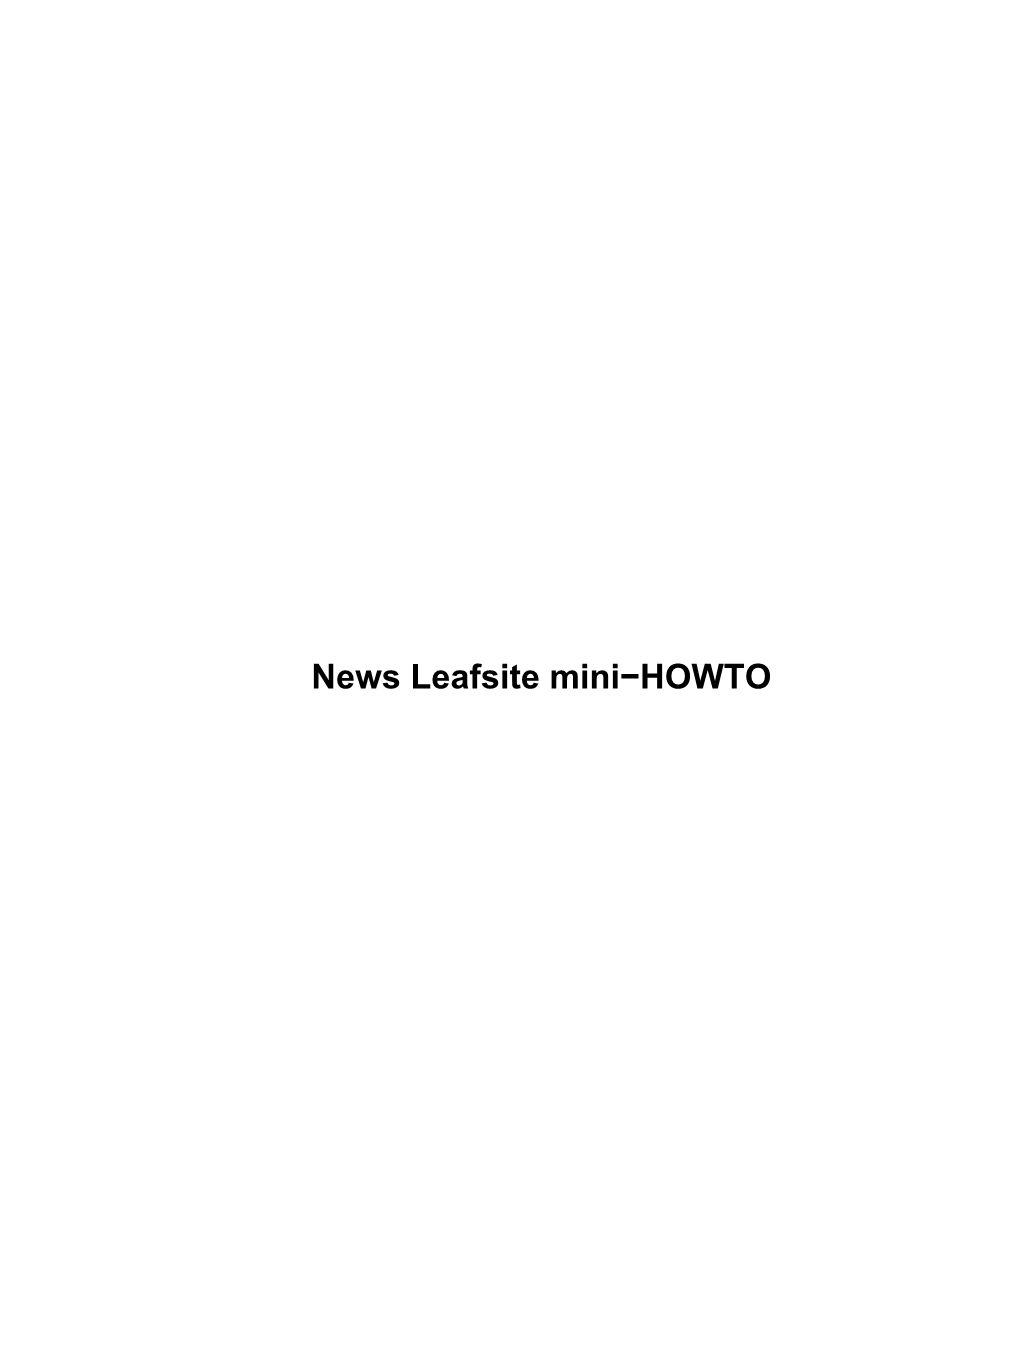 News Leafsite Mini-HOWTO